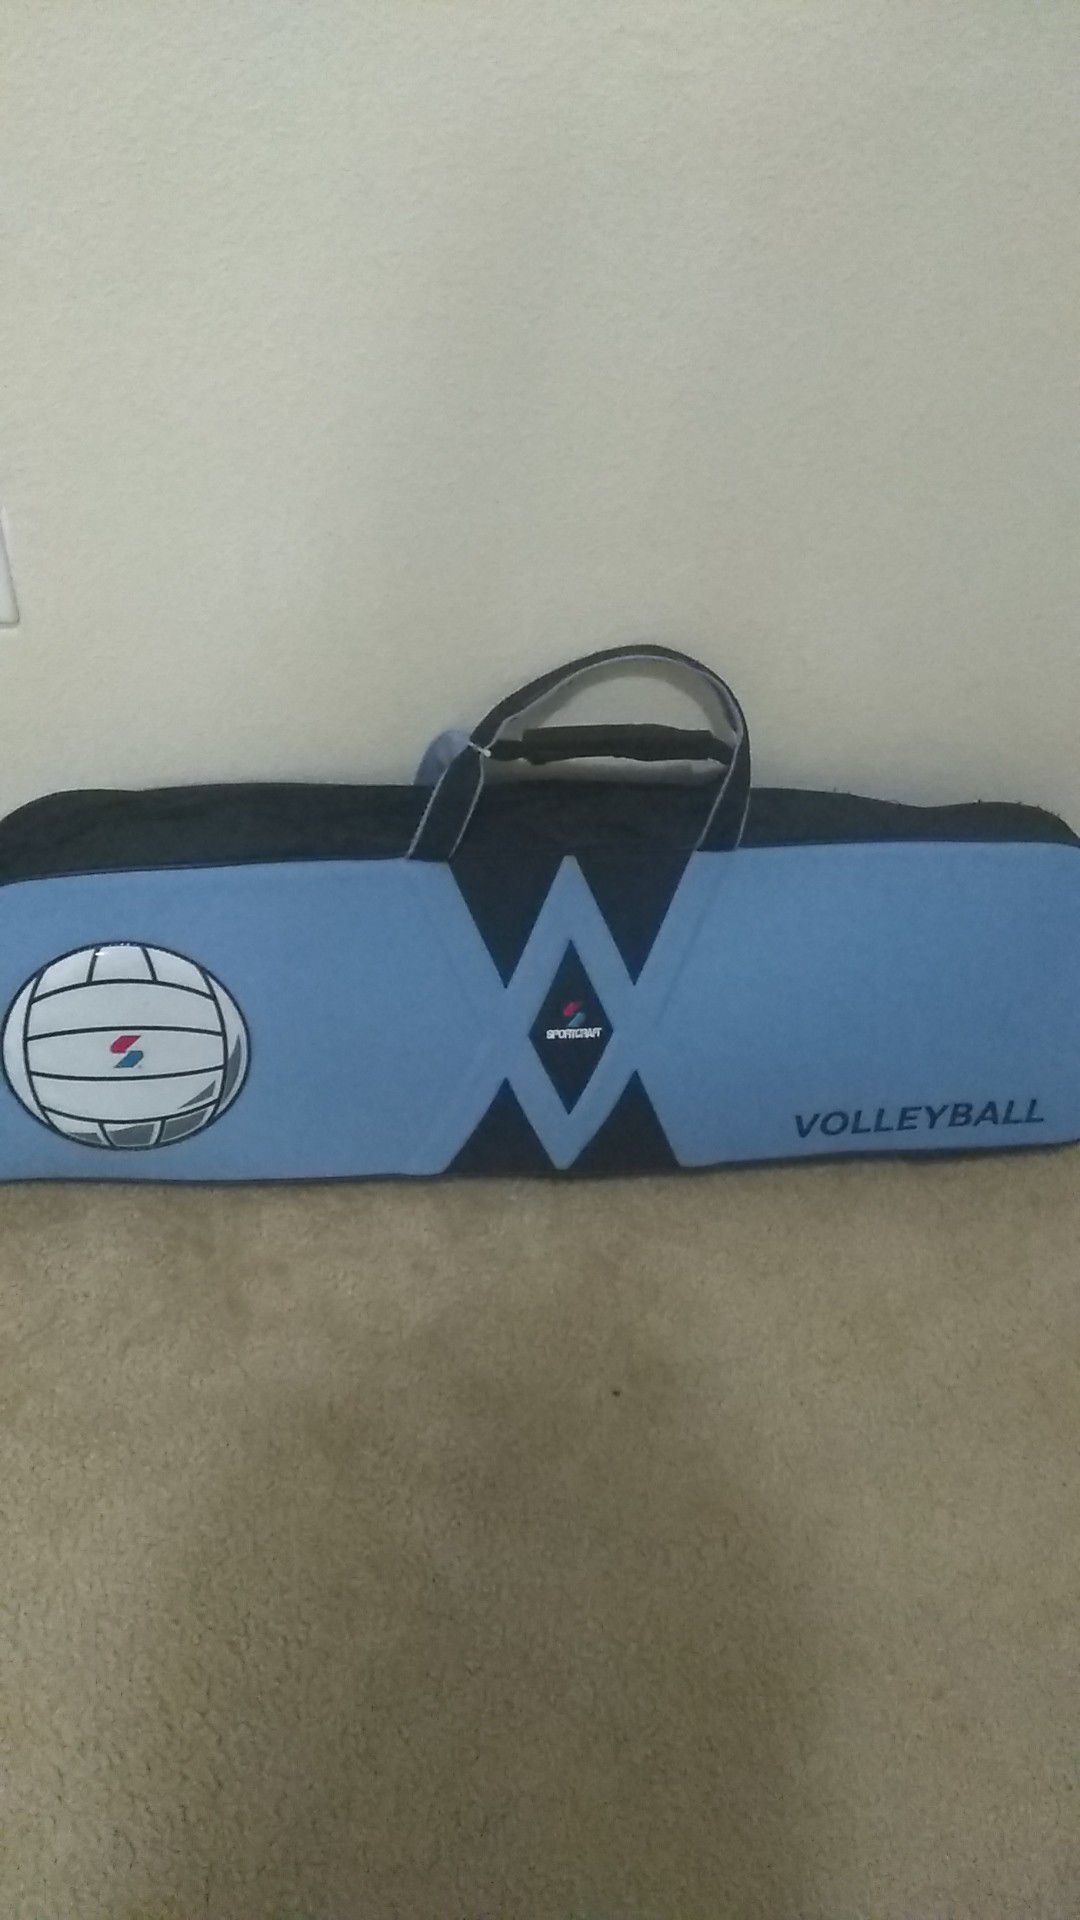 Sportcraft portable volleyball net